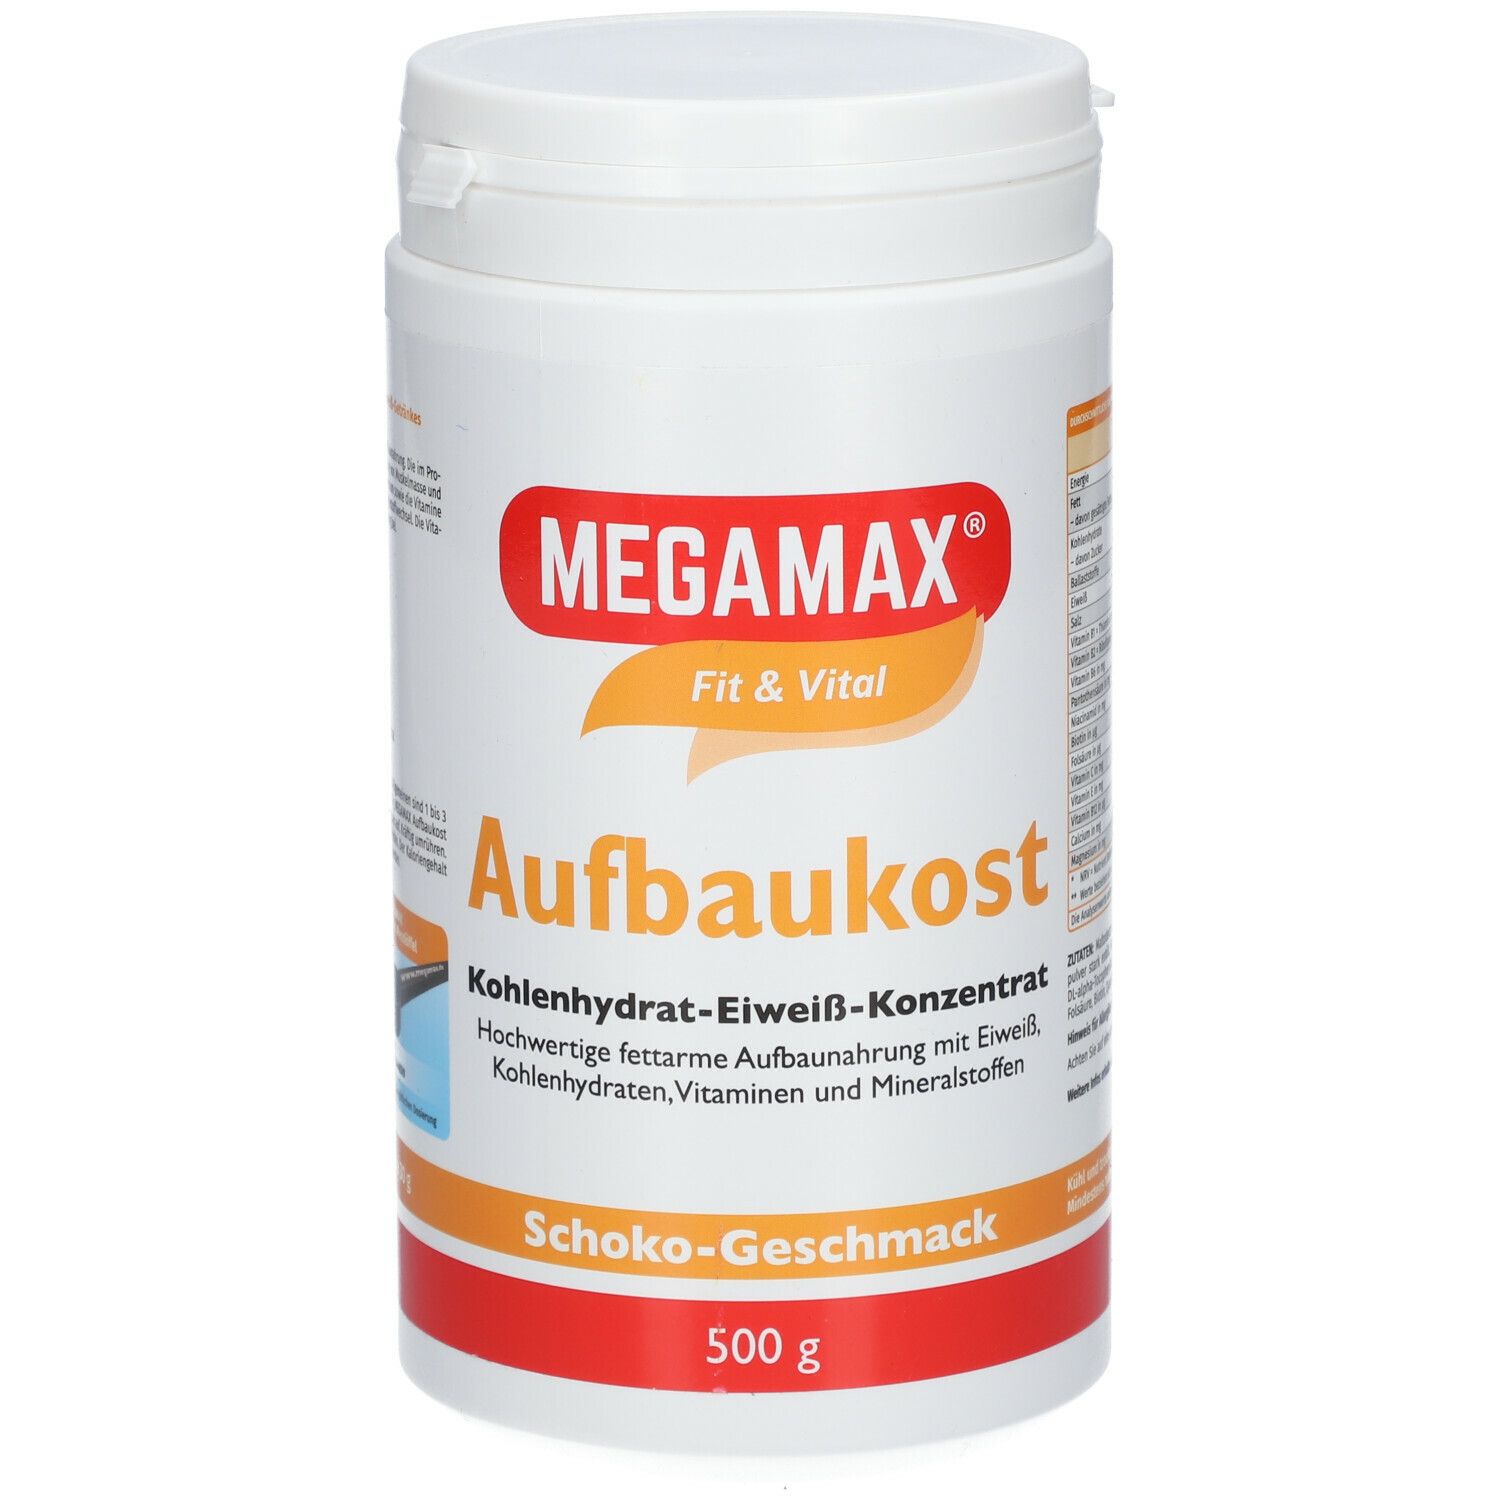 MEGAMAX® Fit & Vital Aufbaukost Kohlenhydrat-Eiweiß-Konzentrat Schoko-Geschmack